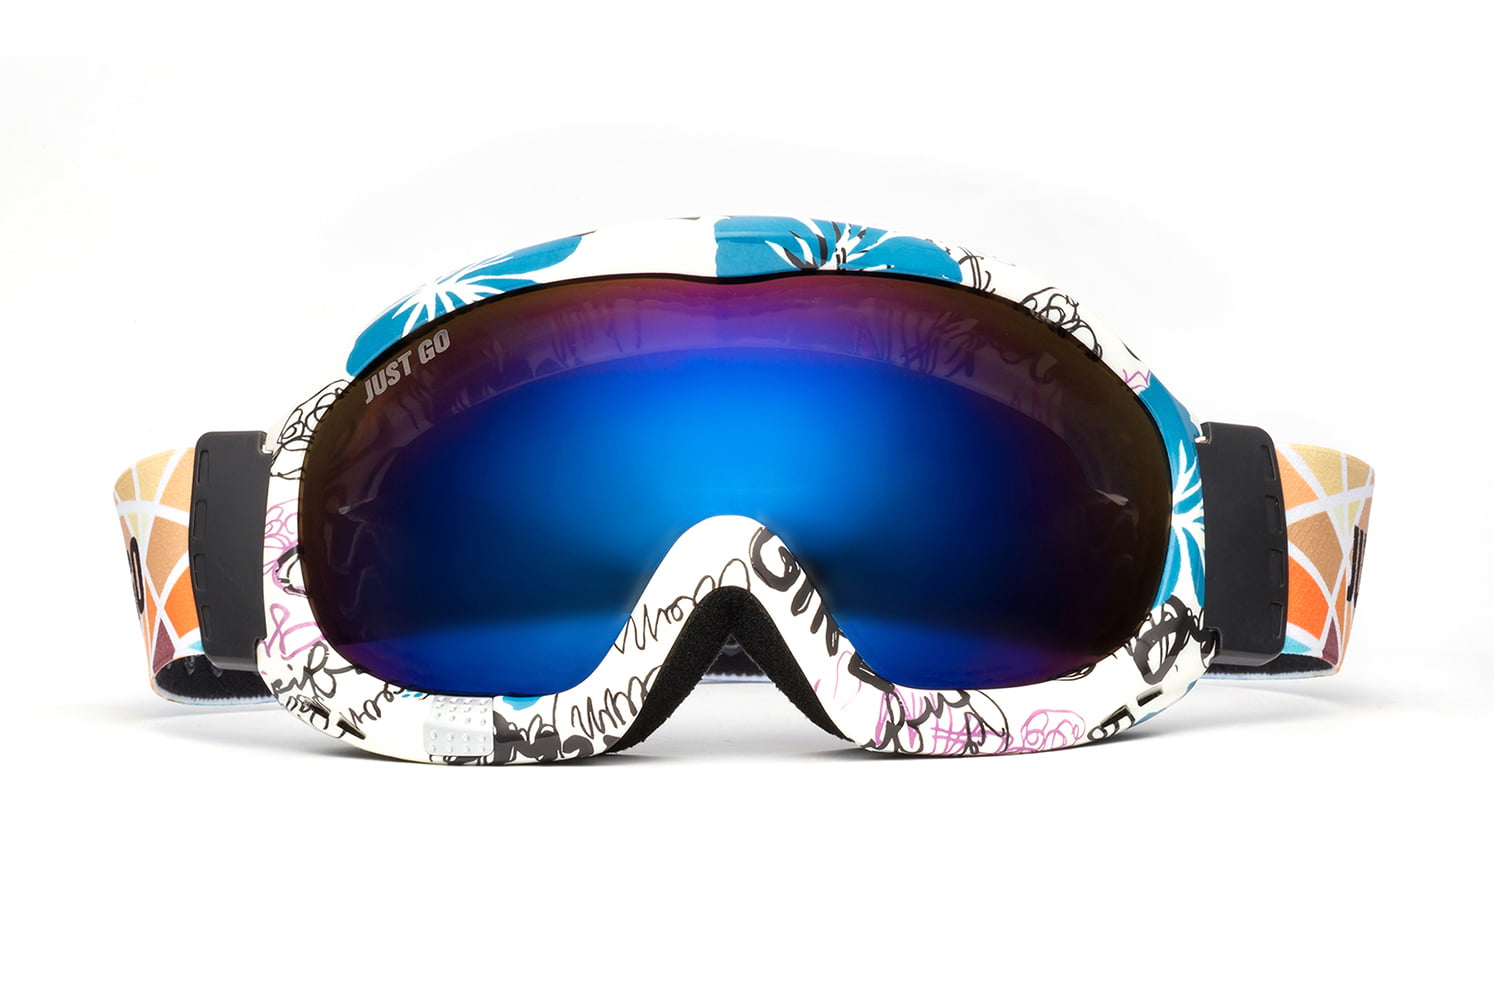 Addult Cloud 9 Ski Goggles Snowboard Anti-Fog Scratch Resist Shatterproof Lens 